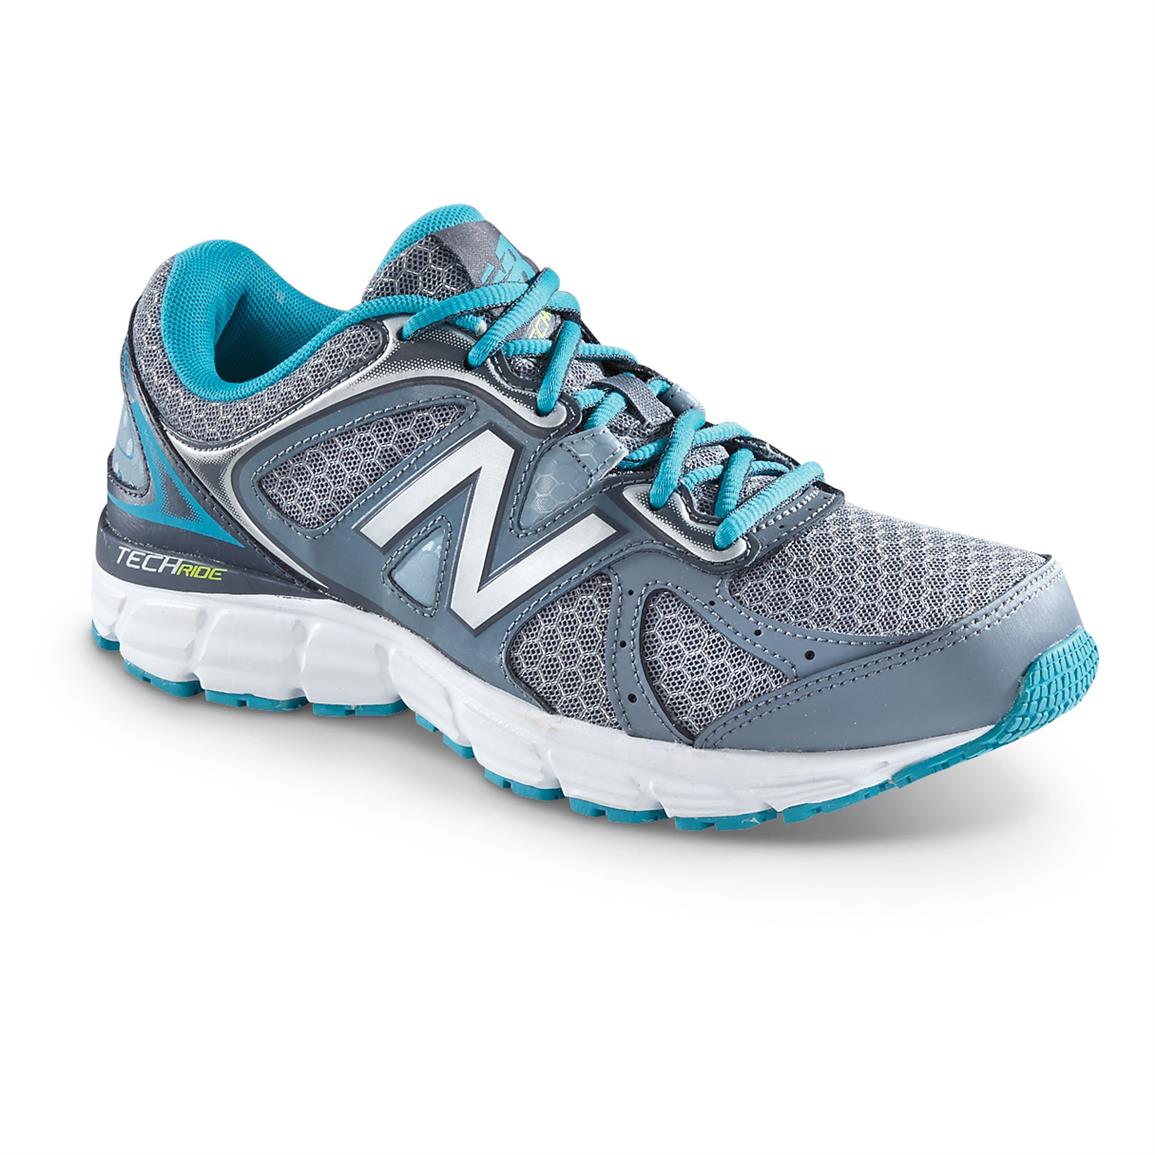 New Balance Women's 560v6 Running Shoes - 654052, Running ...